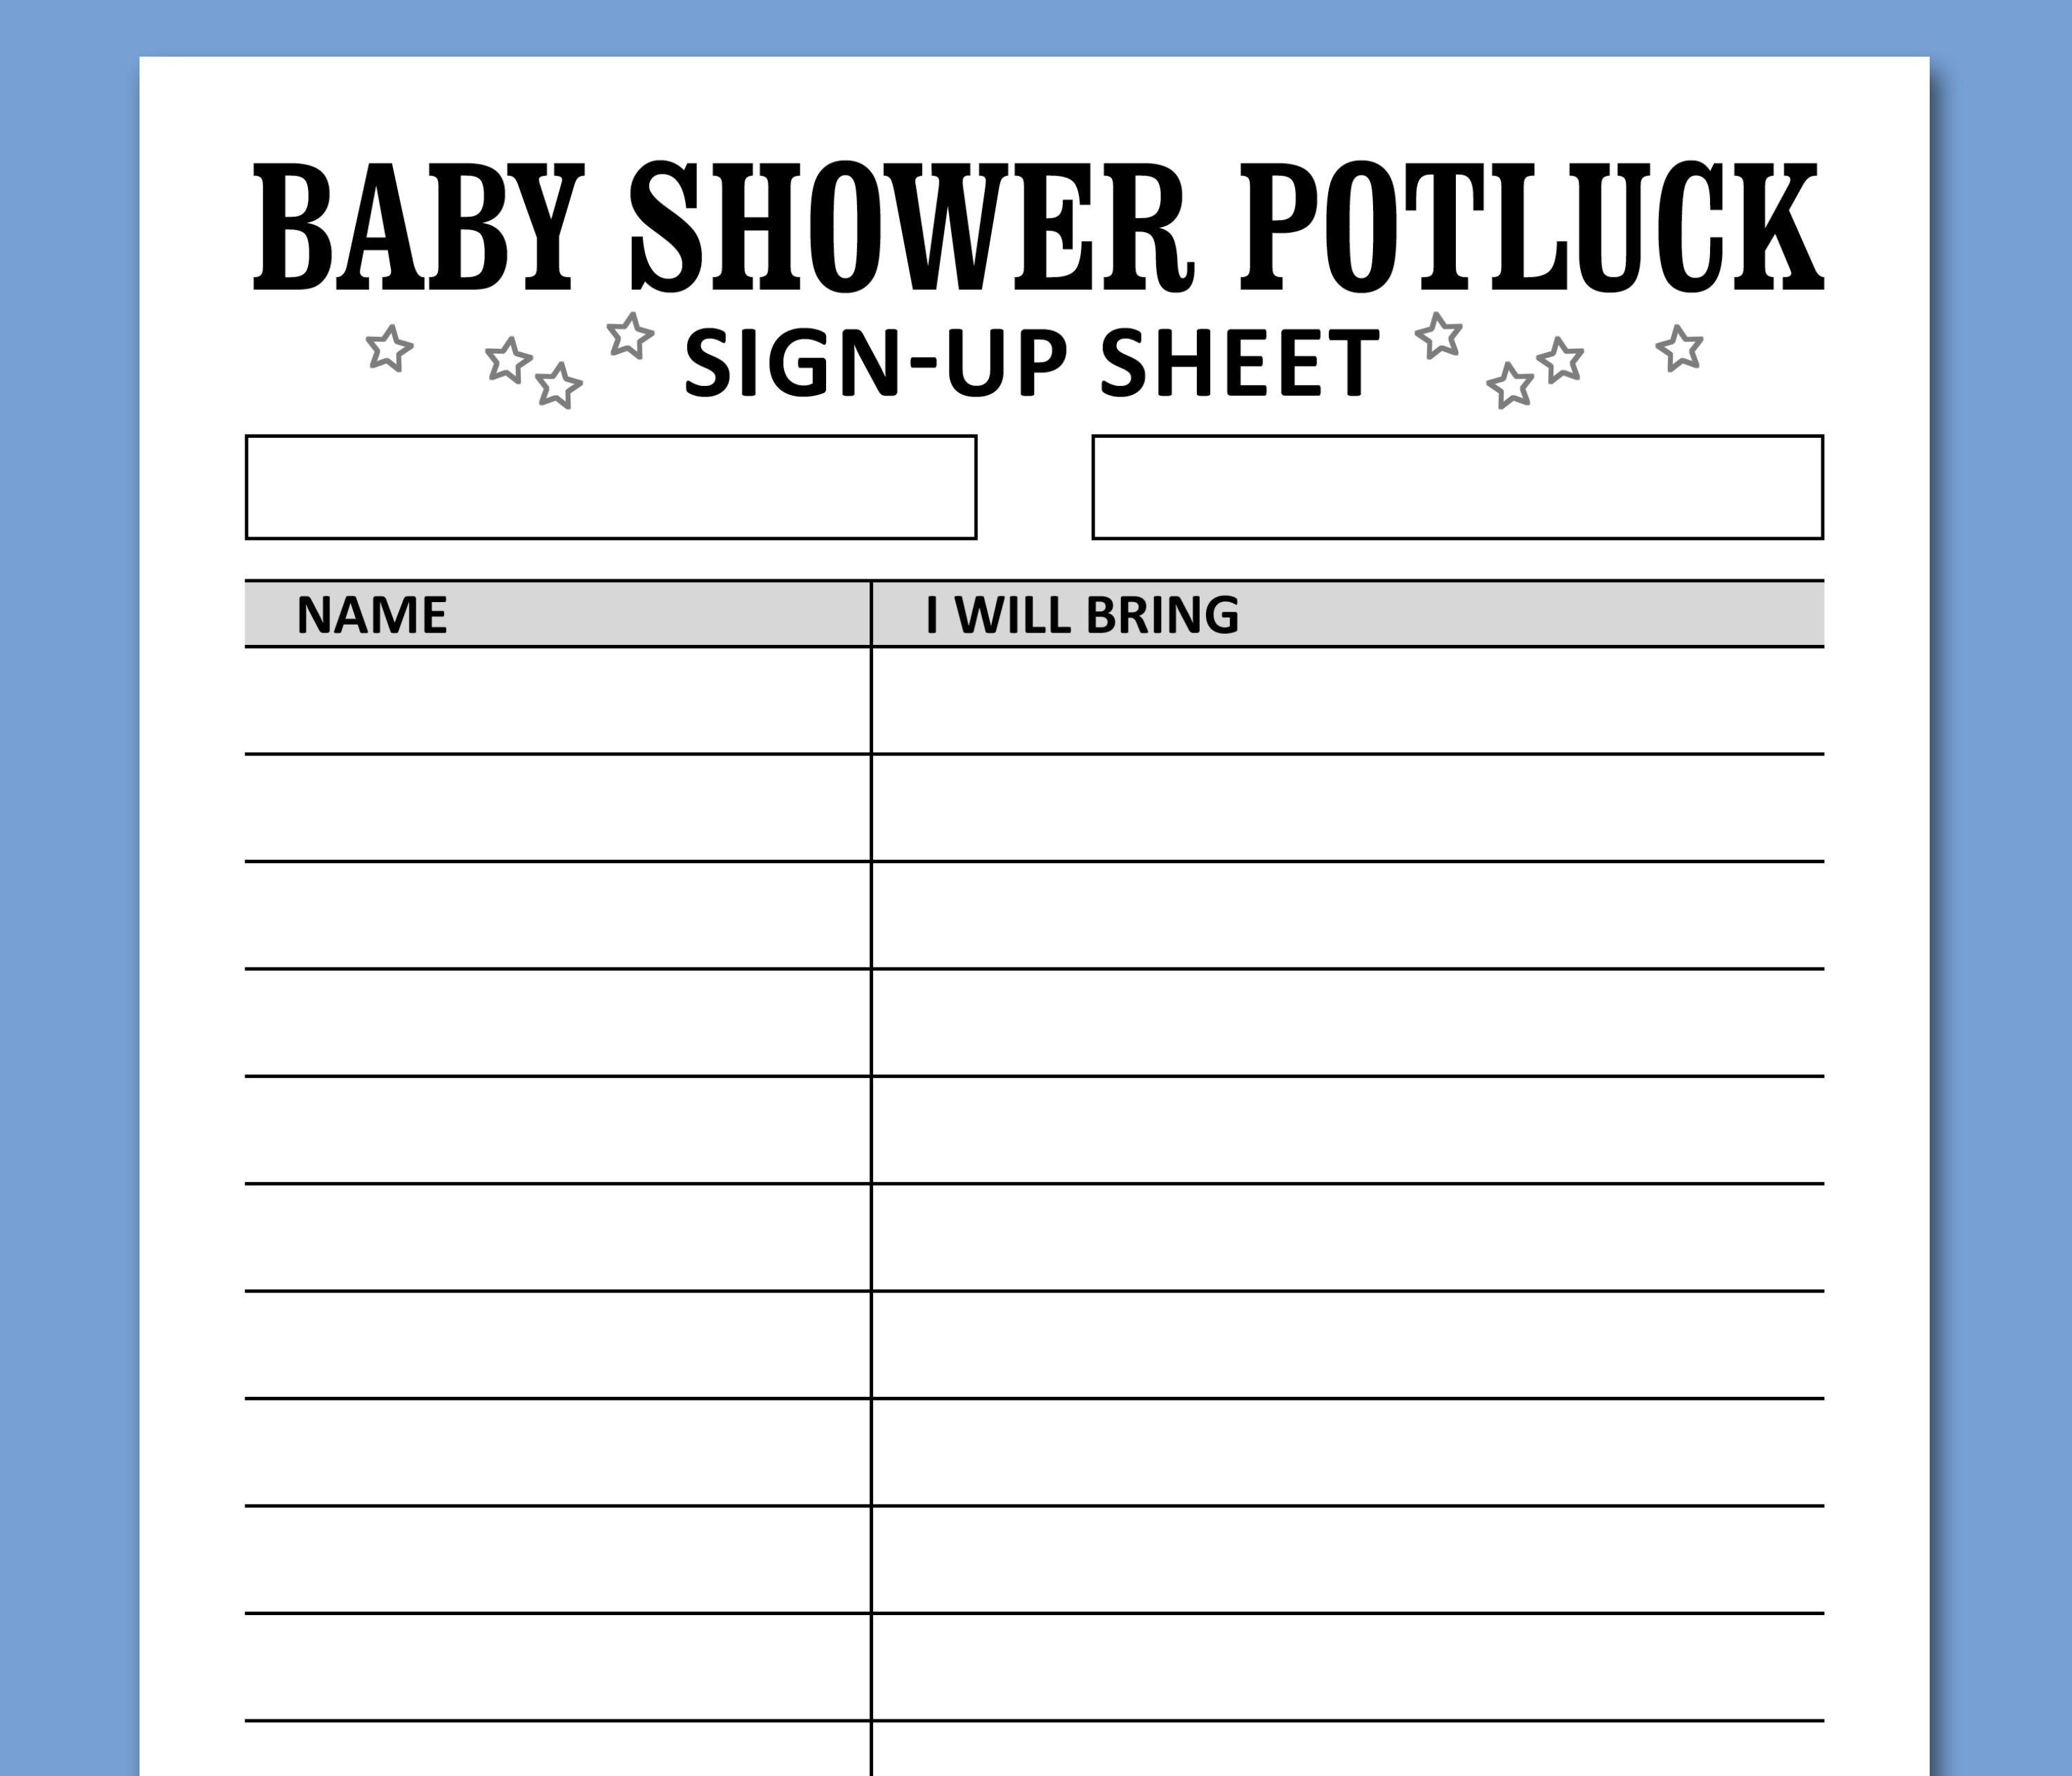 How Do You Make A Potluck Signup Sheet